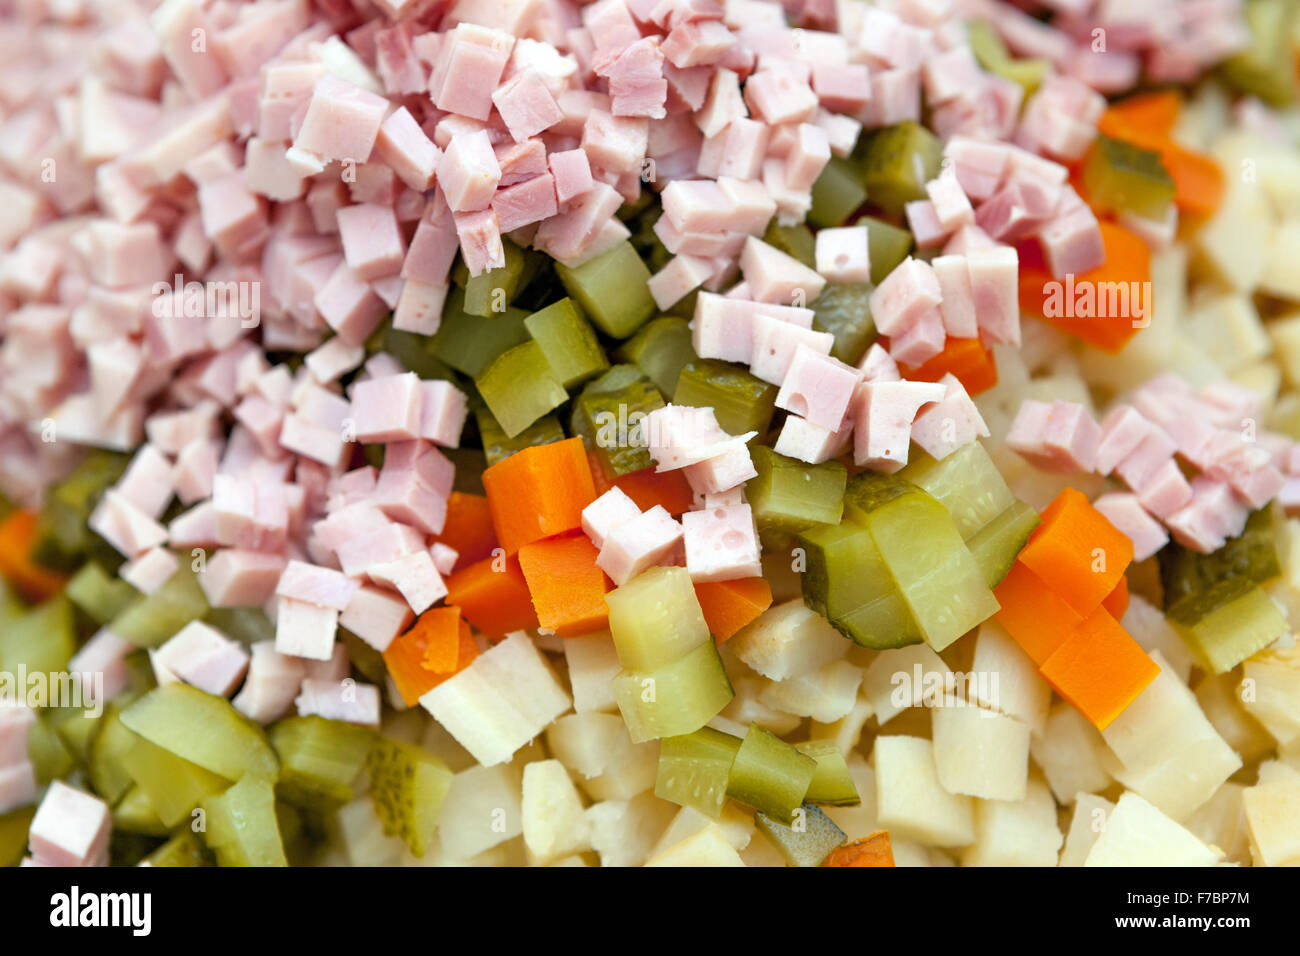 Gli ingredienti in insalata di patate a dadini, salsiccia, cetrioli, carote, patate Foto Stock